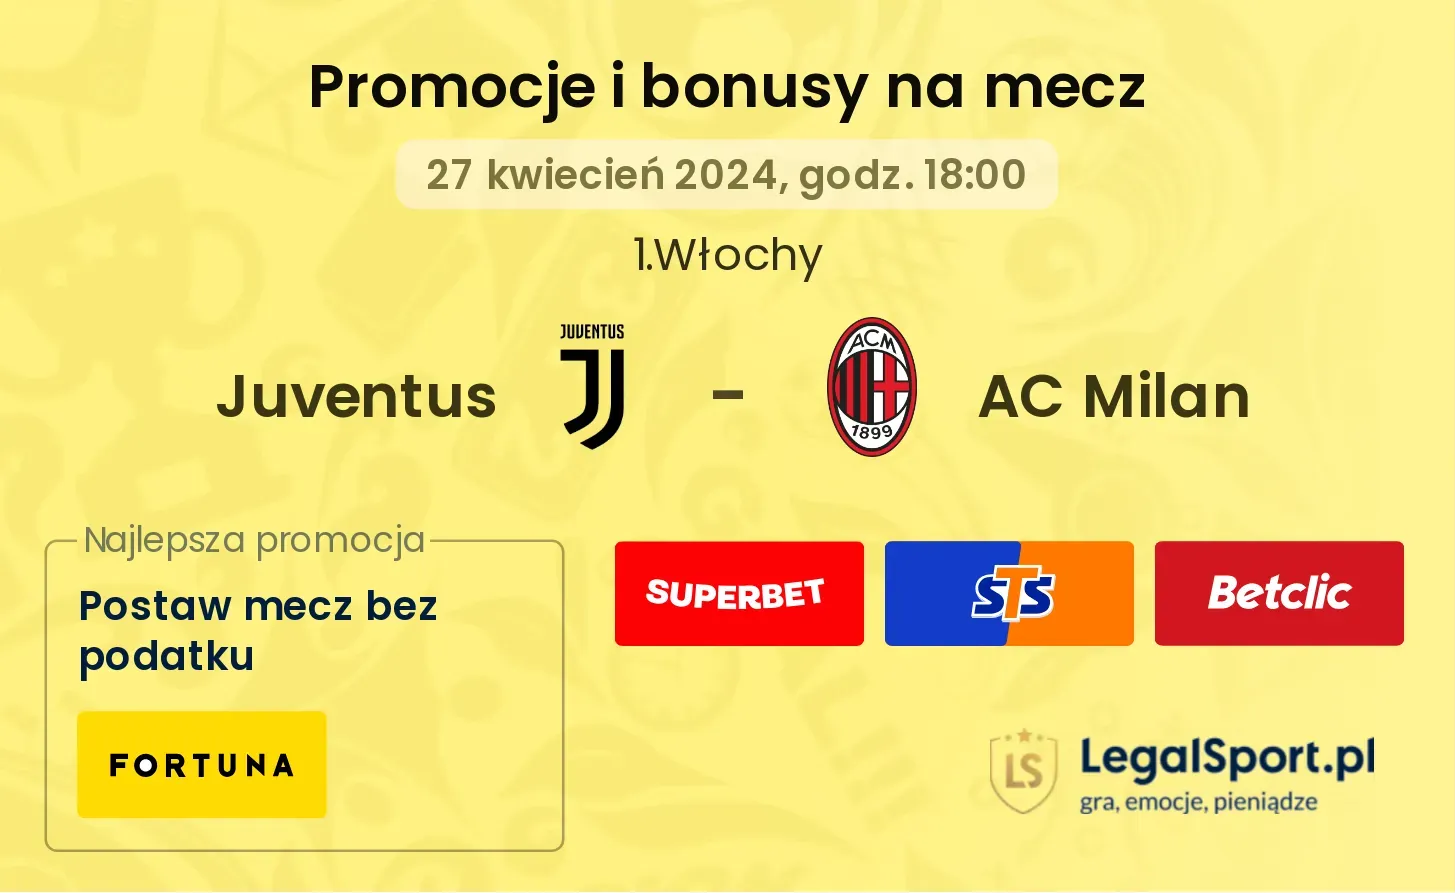 Juventus - AC Milan promocje bonusy na mecz